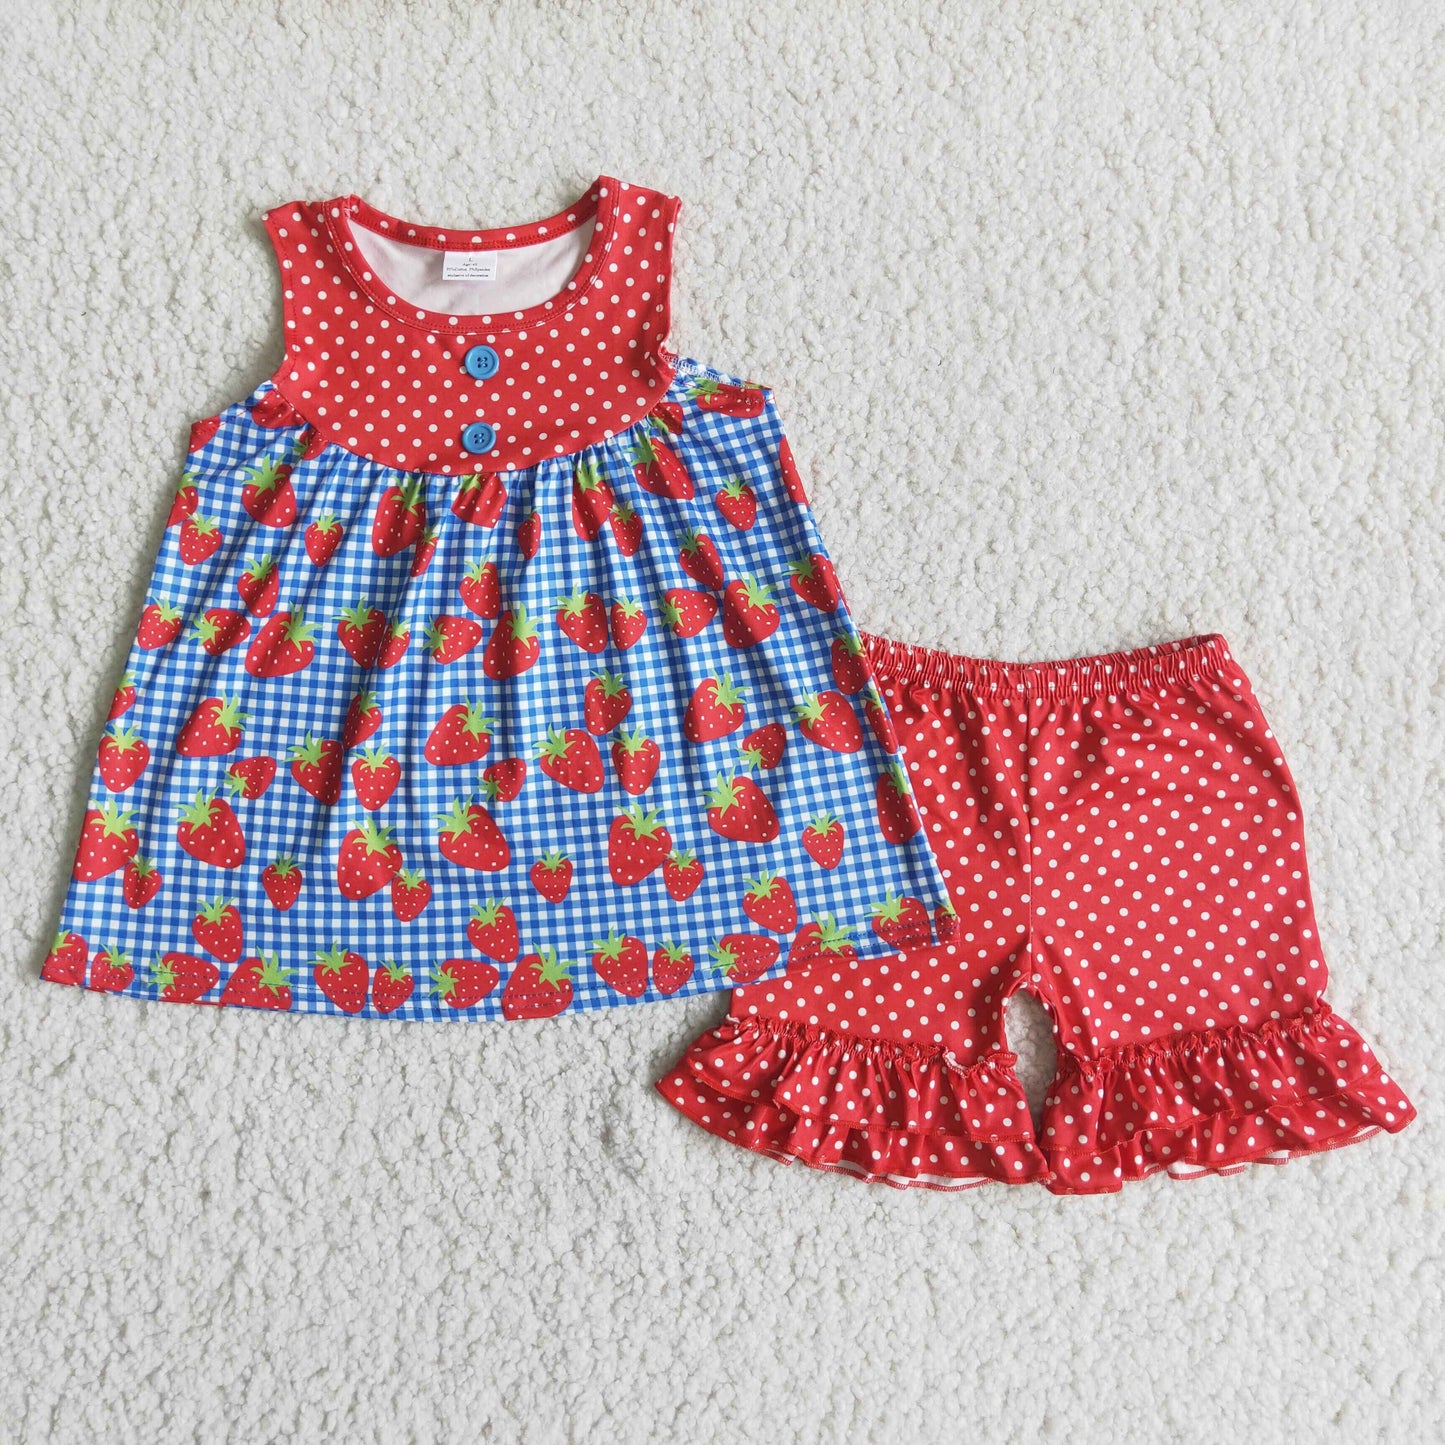 Strawberry sleeveless shirt polka dots shorts girls summer clothing